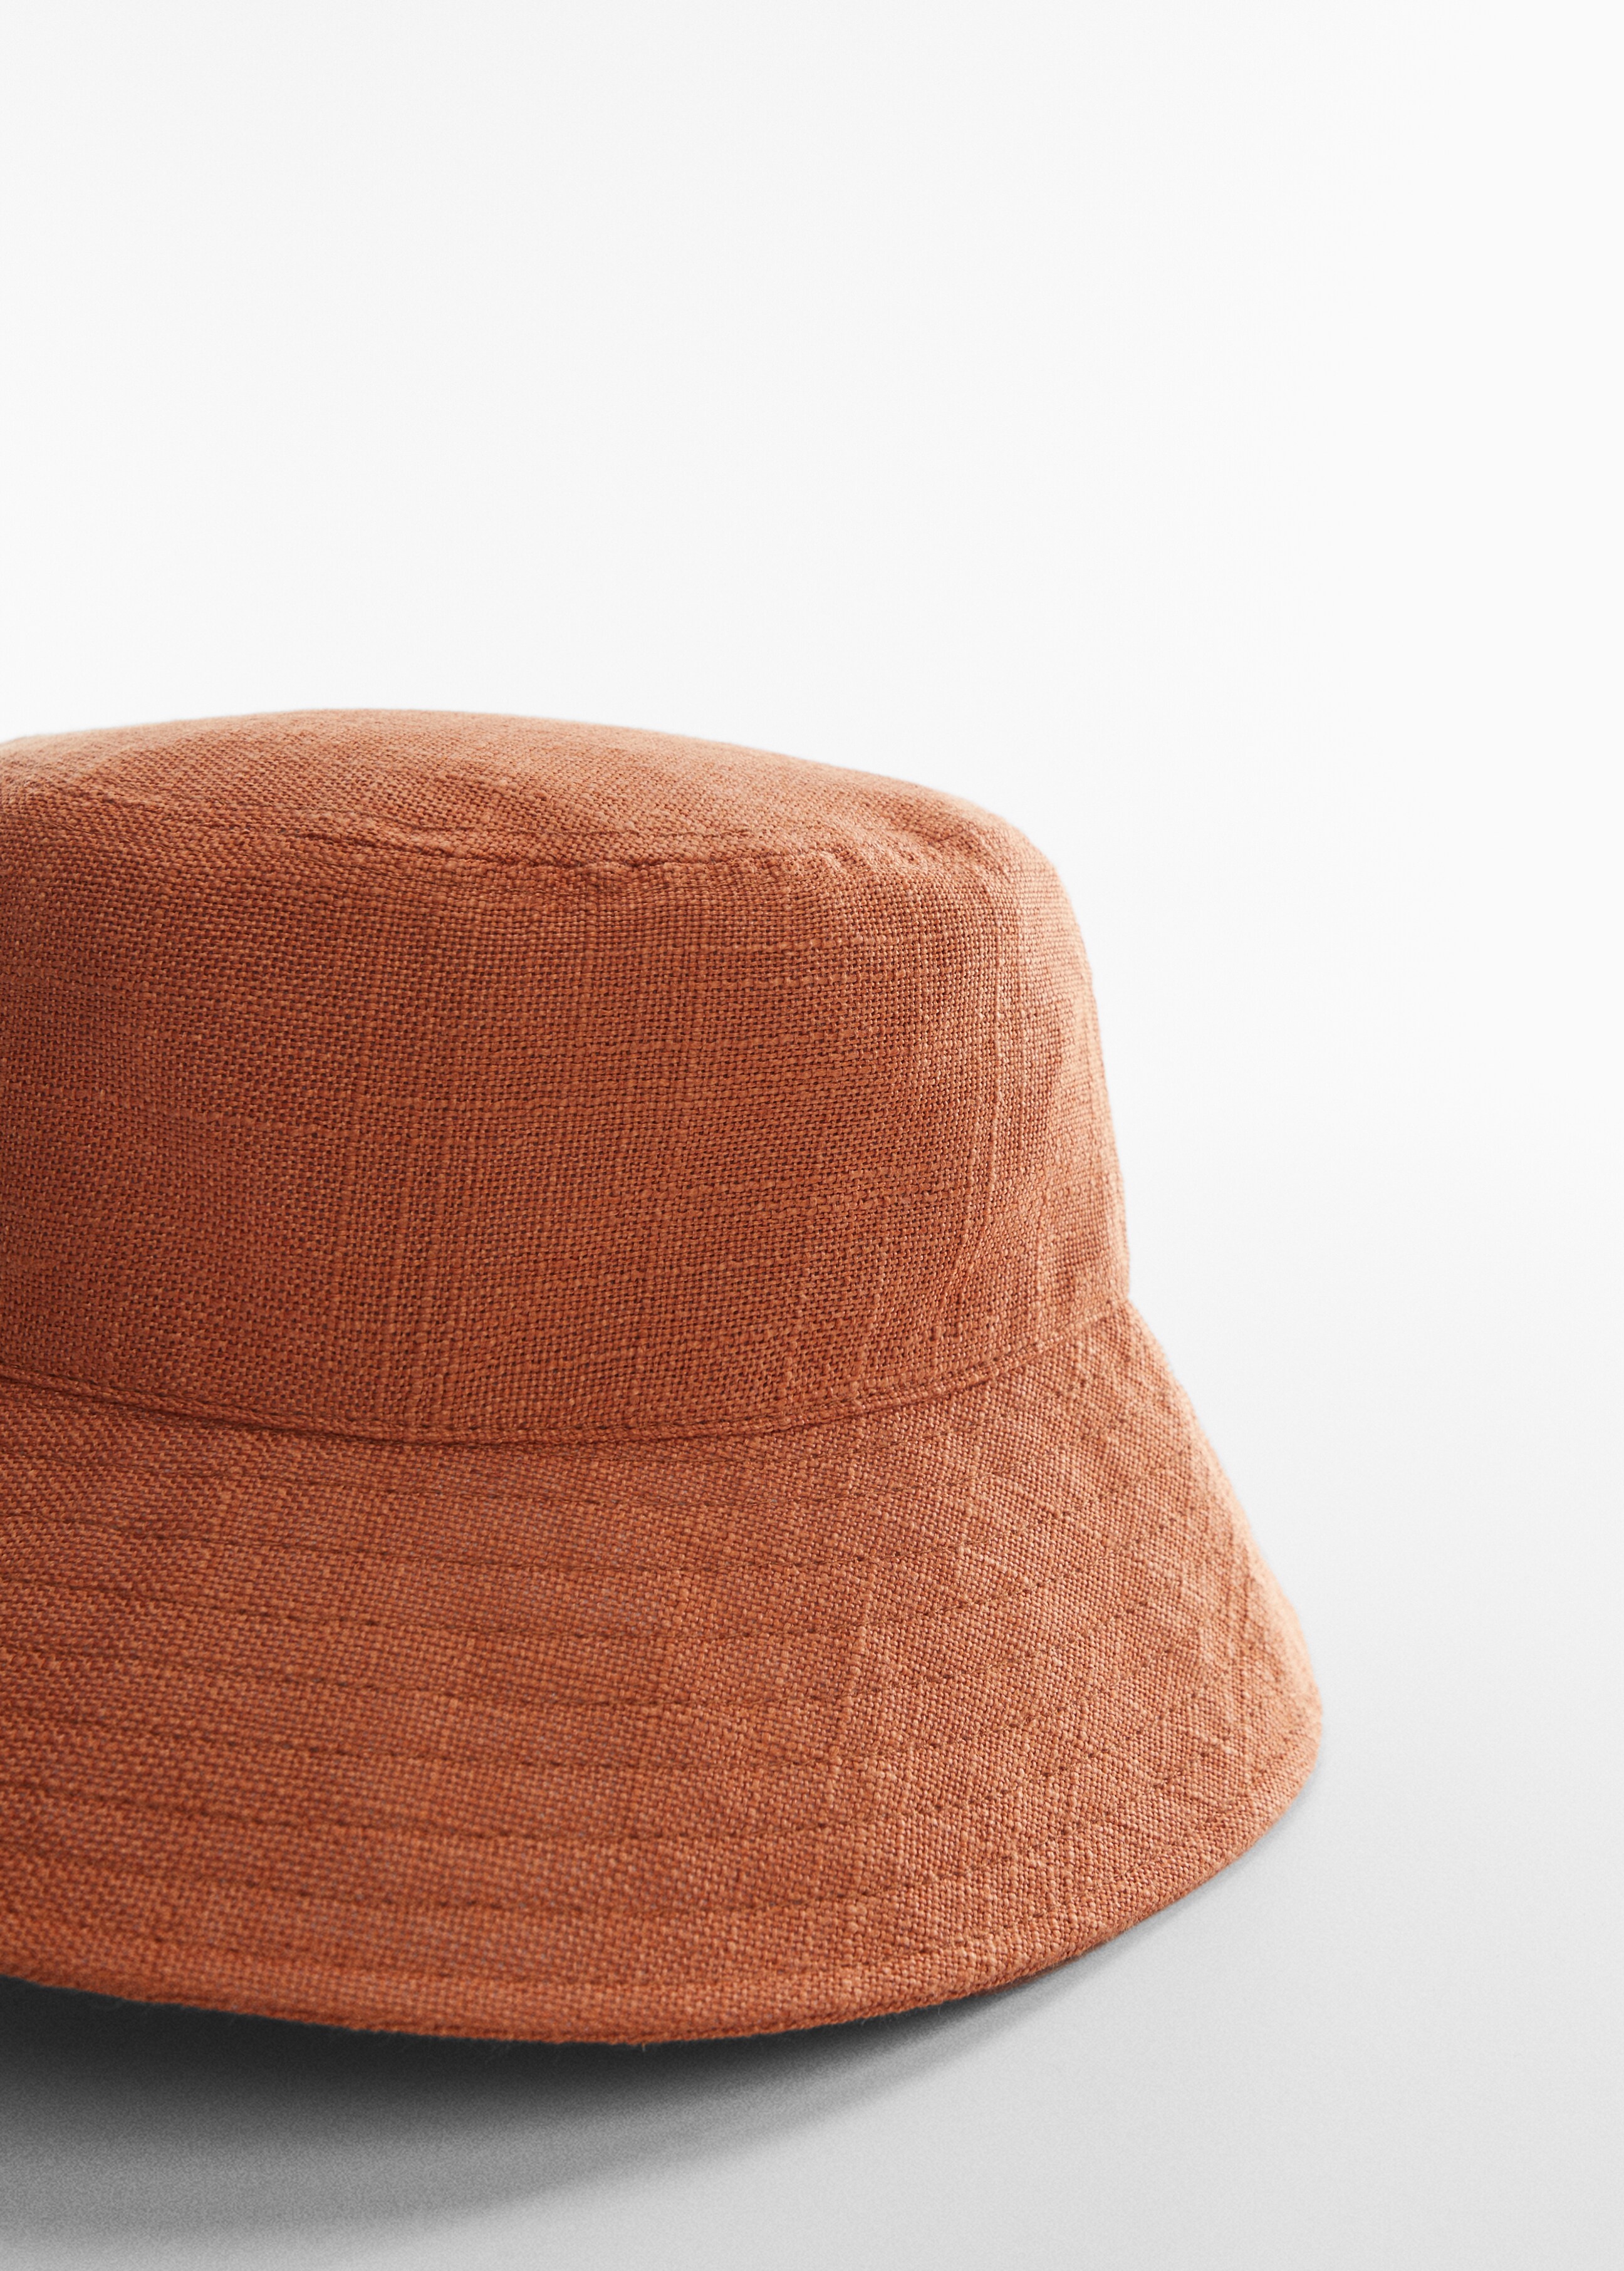 Bucket hat - Medium plane